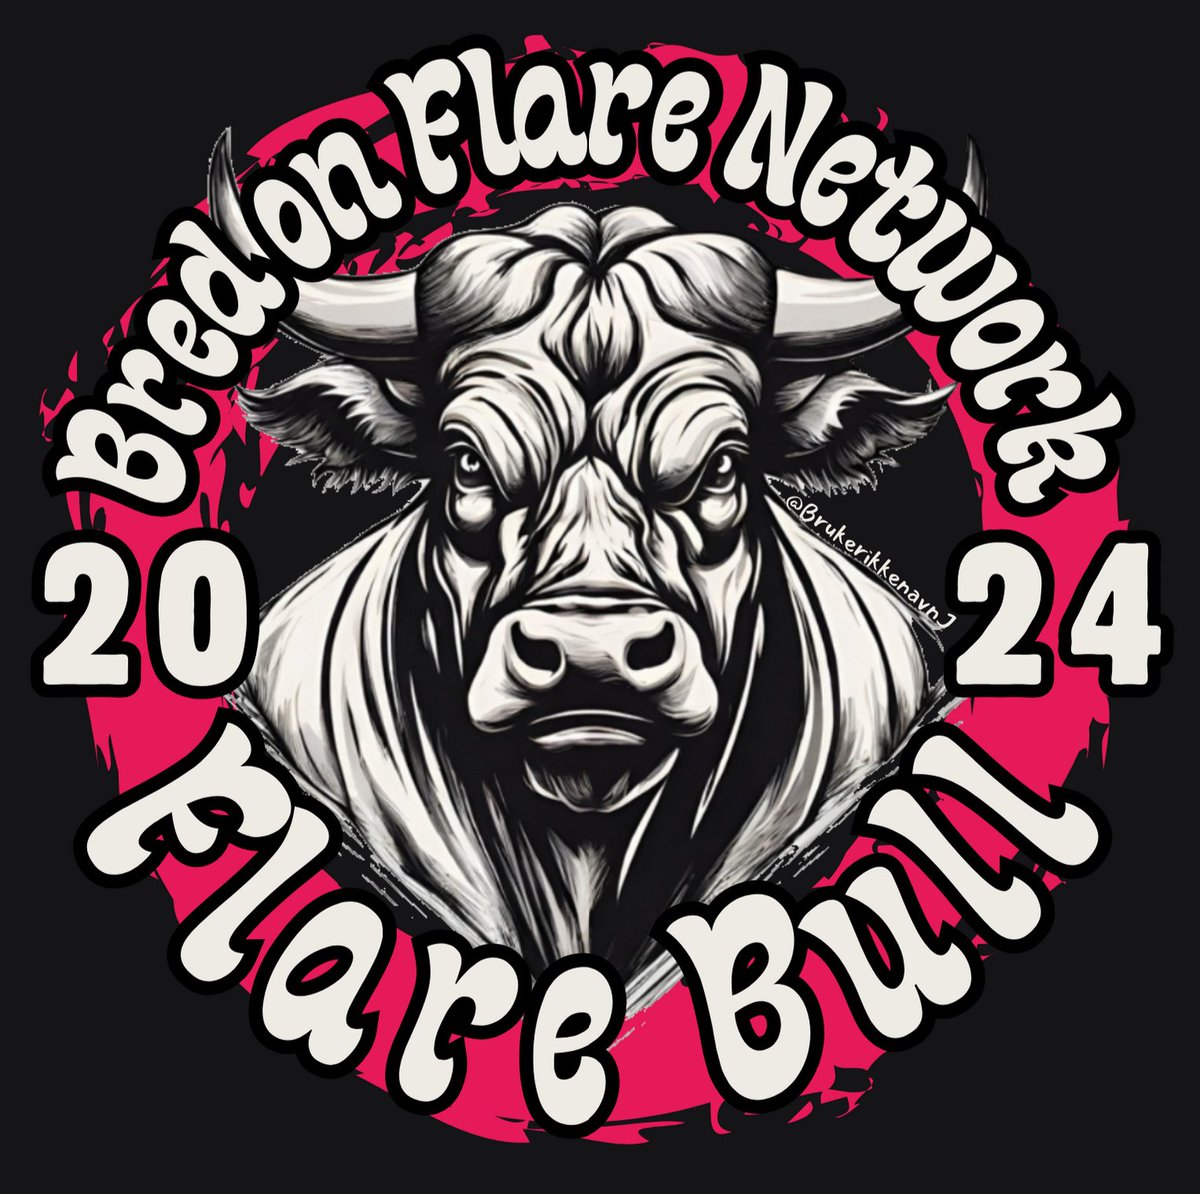 Once a #FlareBull, always a FlareBull! ☀️💛 where my Bulls at?
#FlareNetwork #FlareCommunity 
#FlareFam #ConnectEverything 
#ShipEverything2024 $FLR